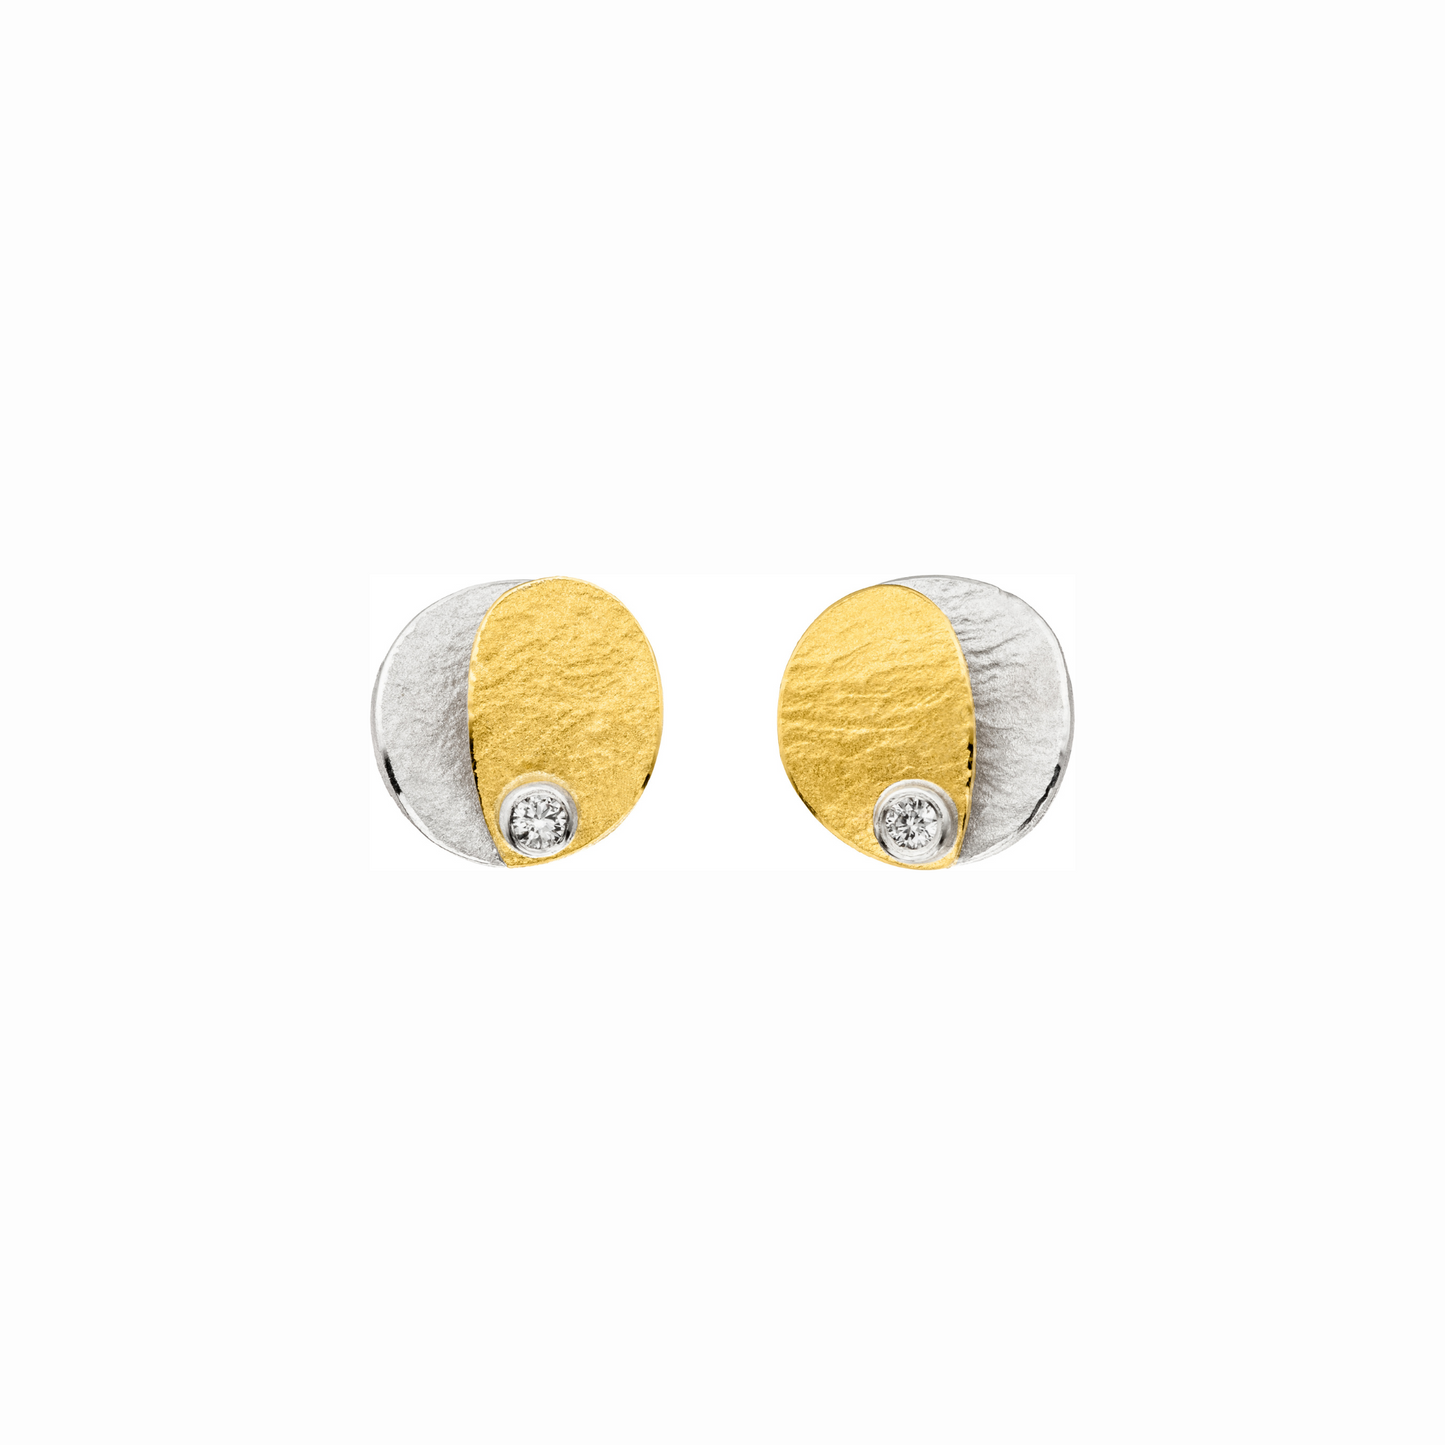 MANU SCHMUCK - Diamond earrings 0.02ct